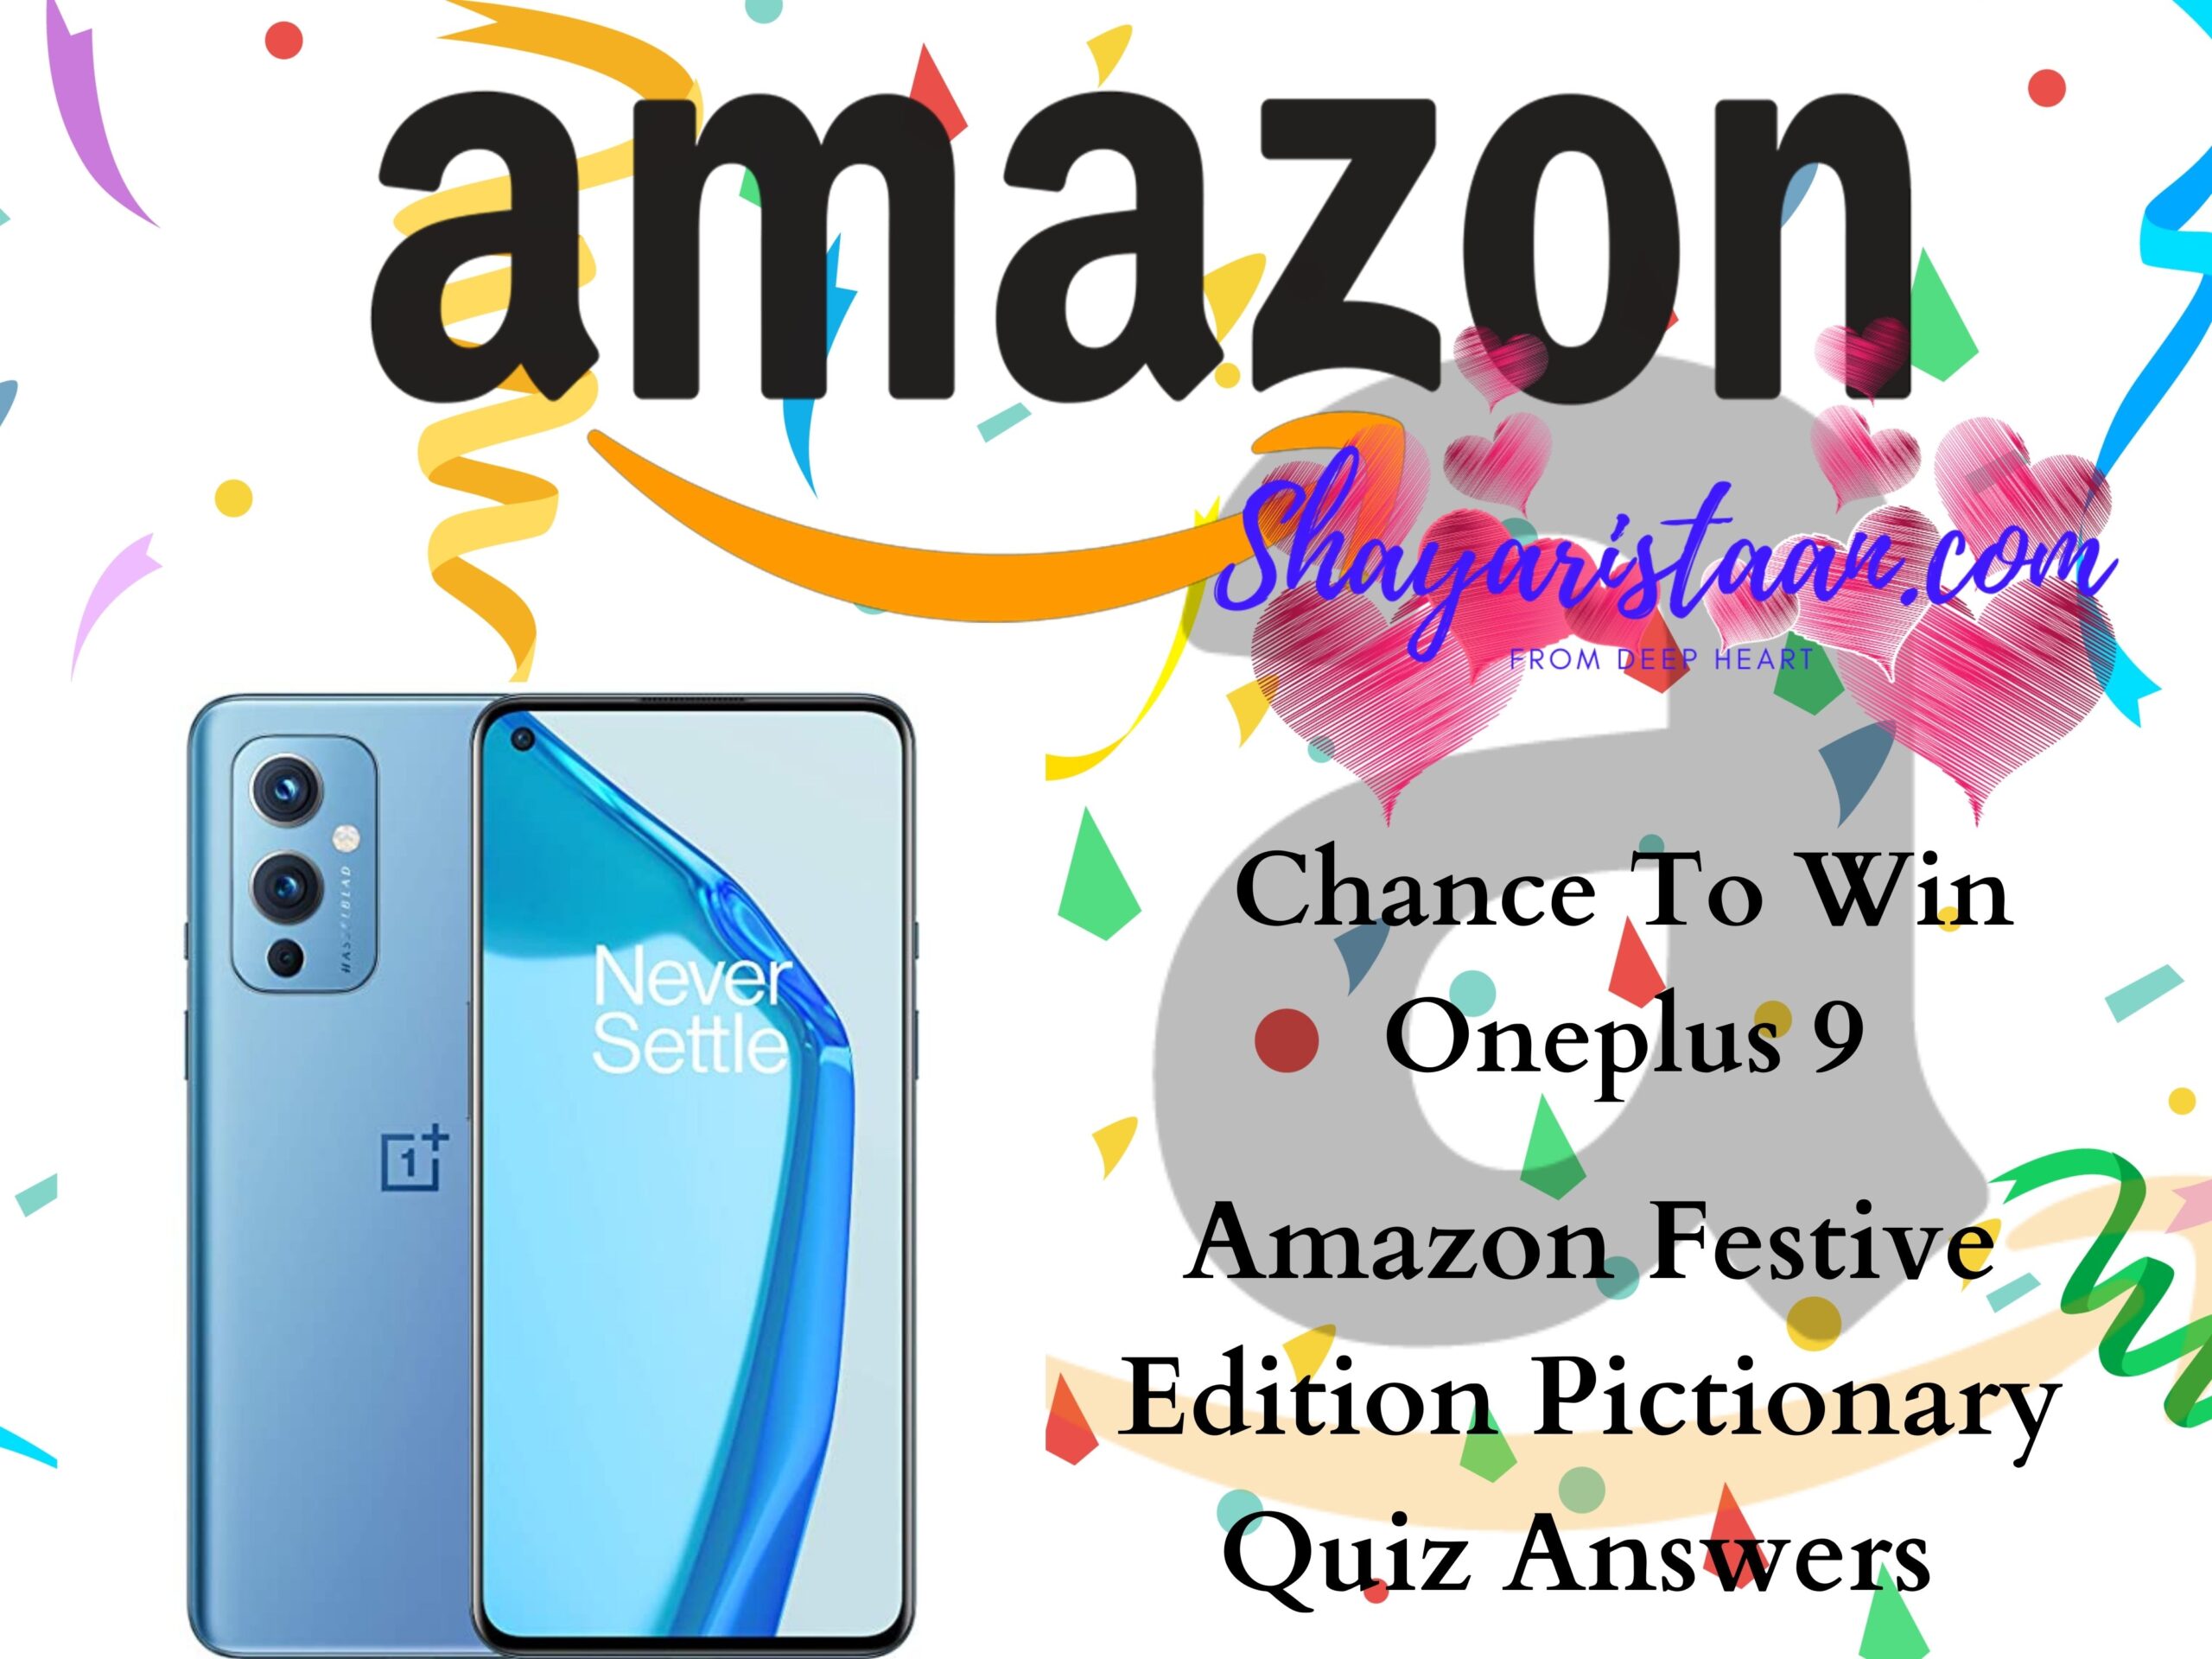 Amazon Festive Edition Pictionary Quiz Answers